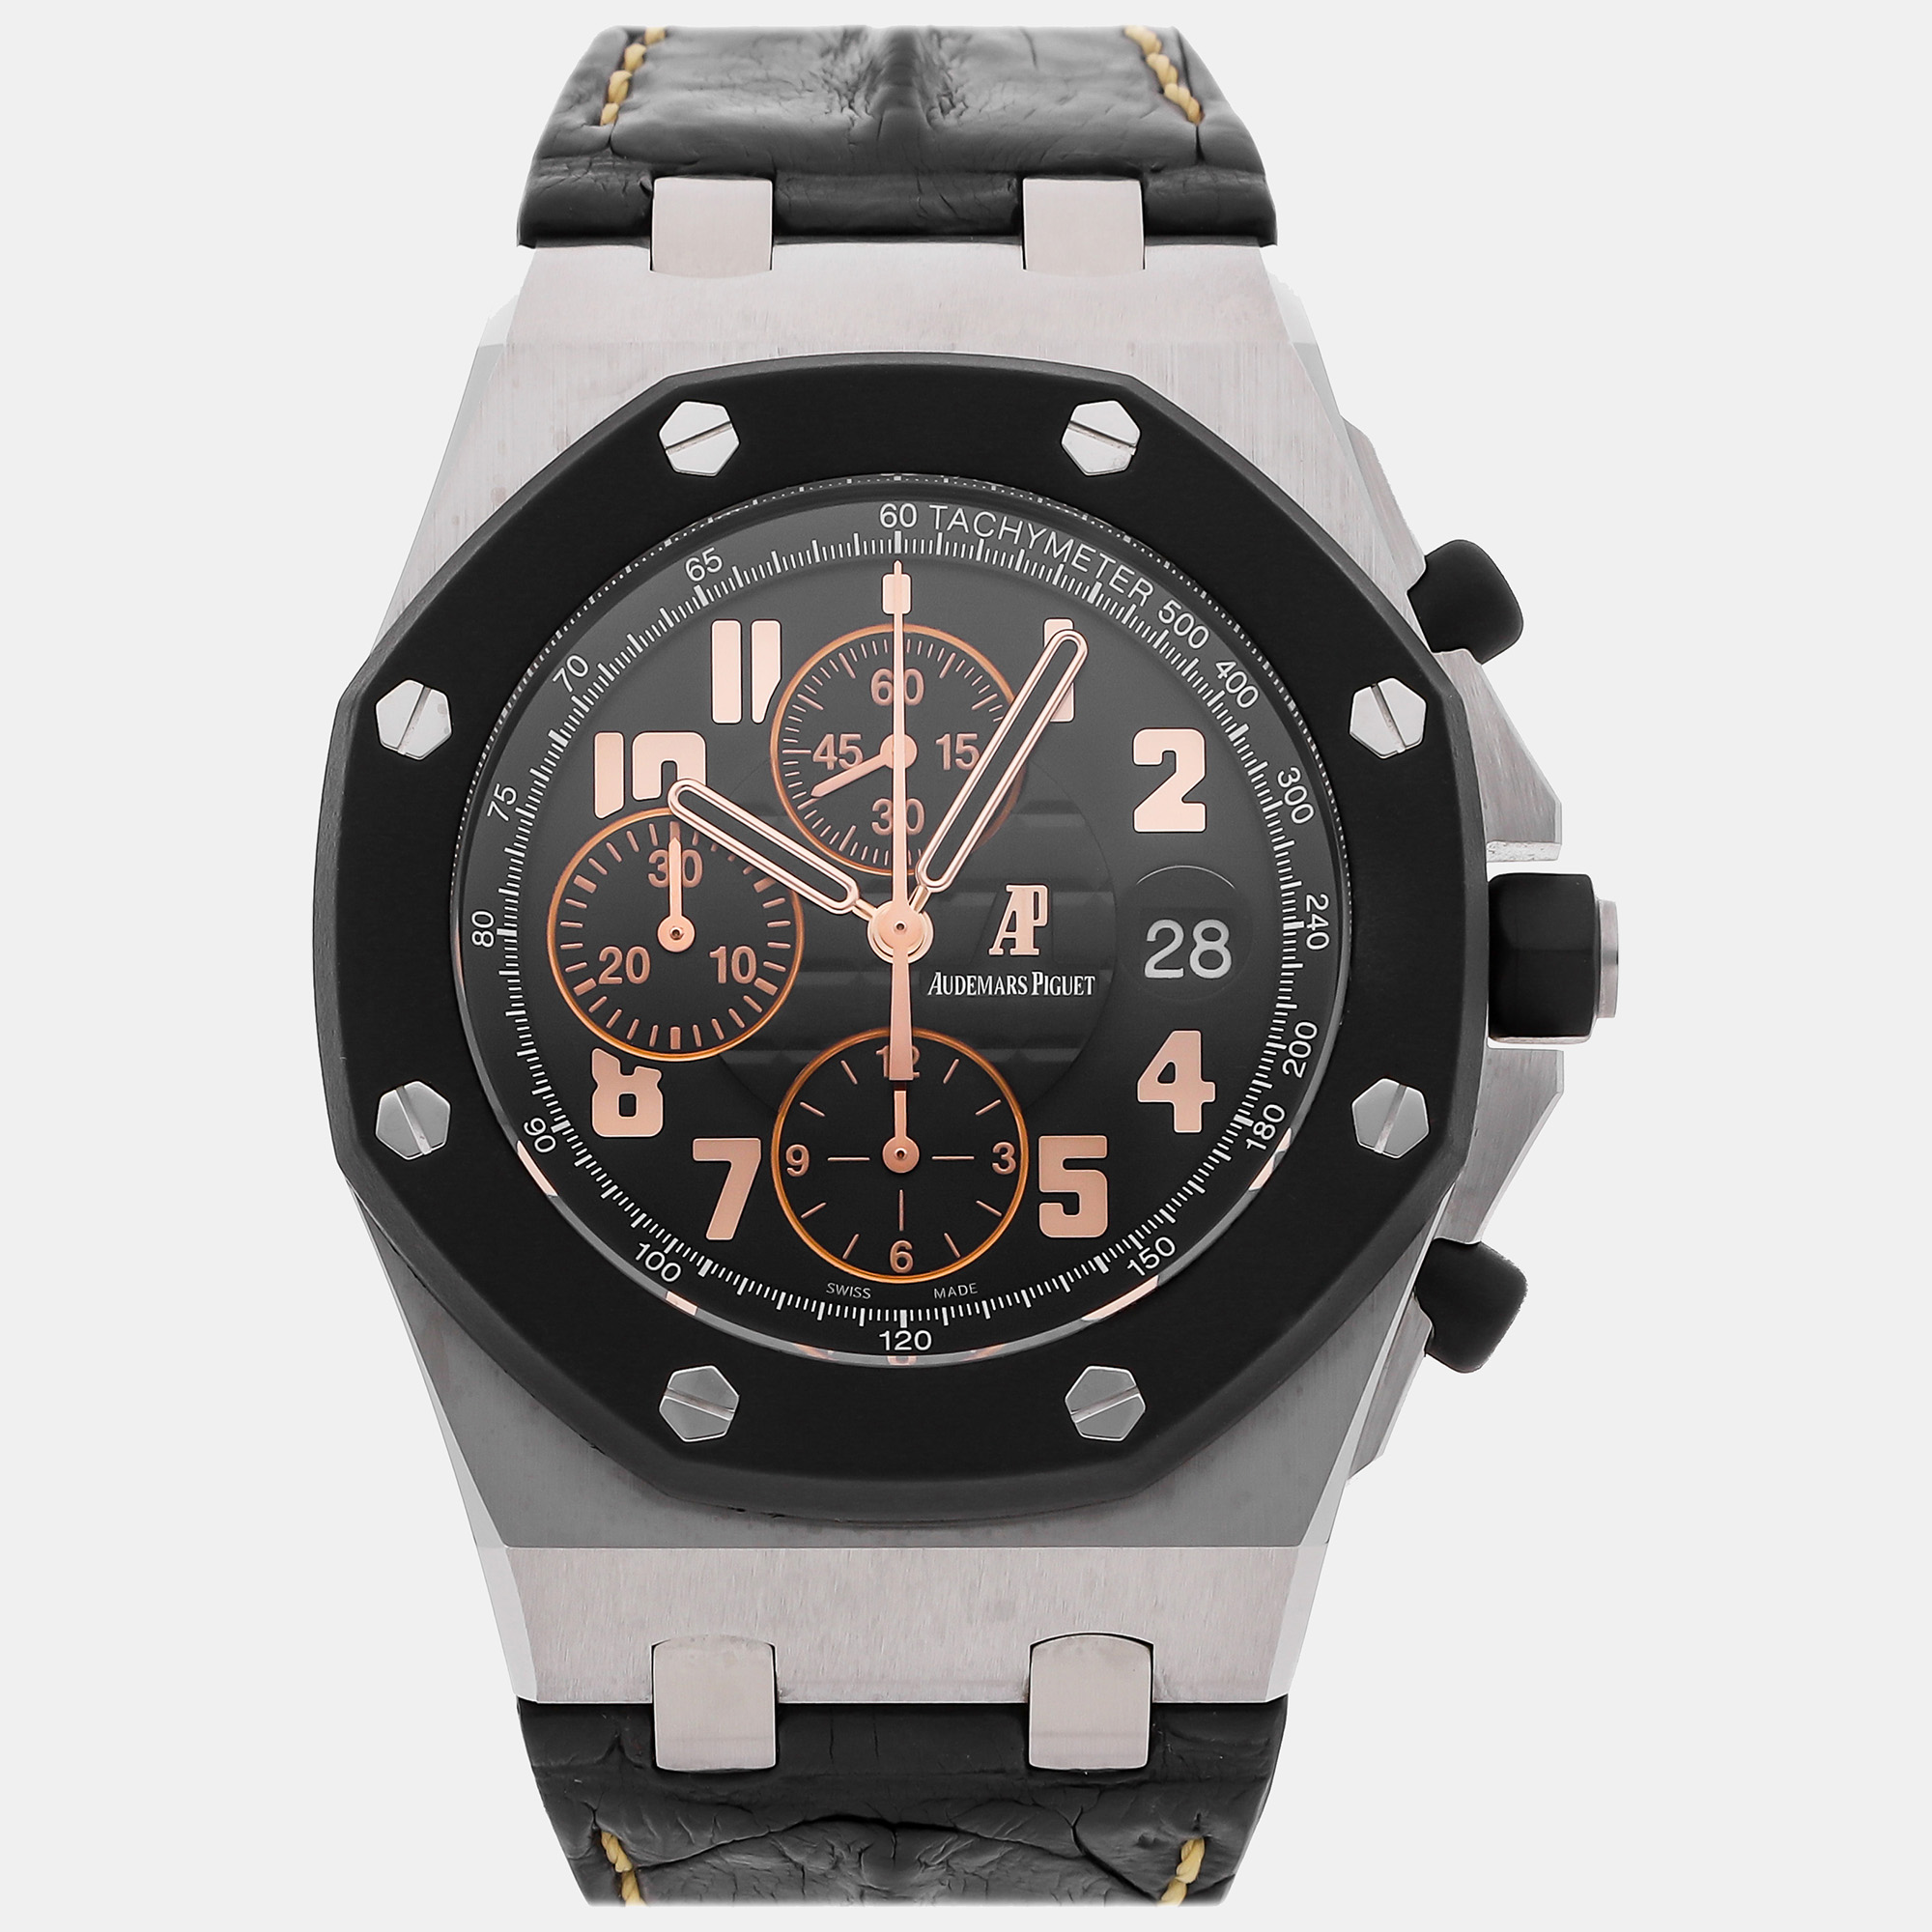 Audemars piguet black stainless steel royal oak offshore 26298sk.oo.d101cr.01 automatic men's wristwatch 42 mm